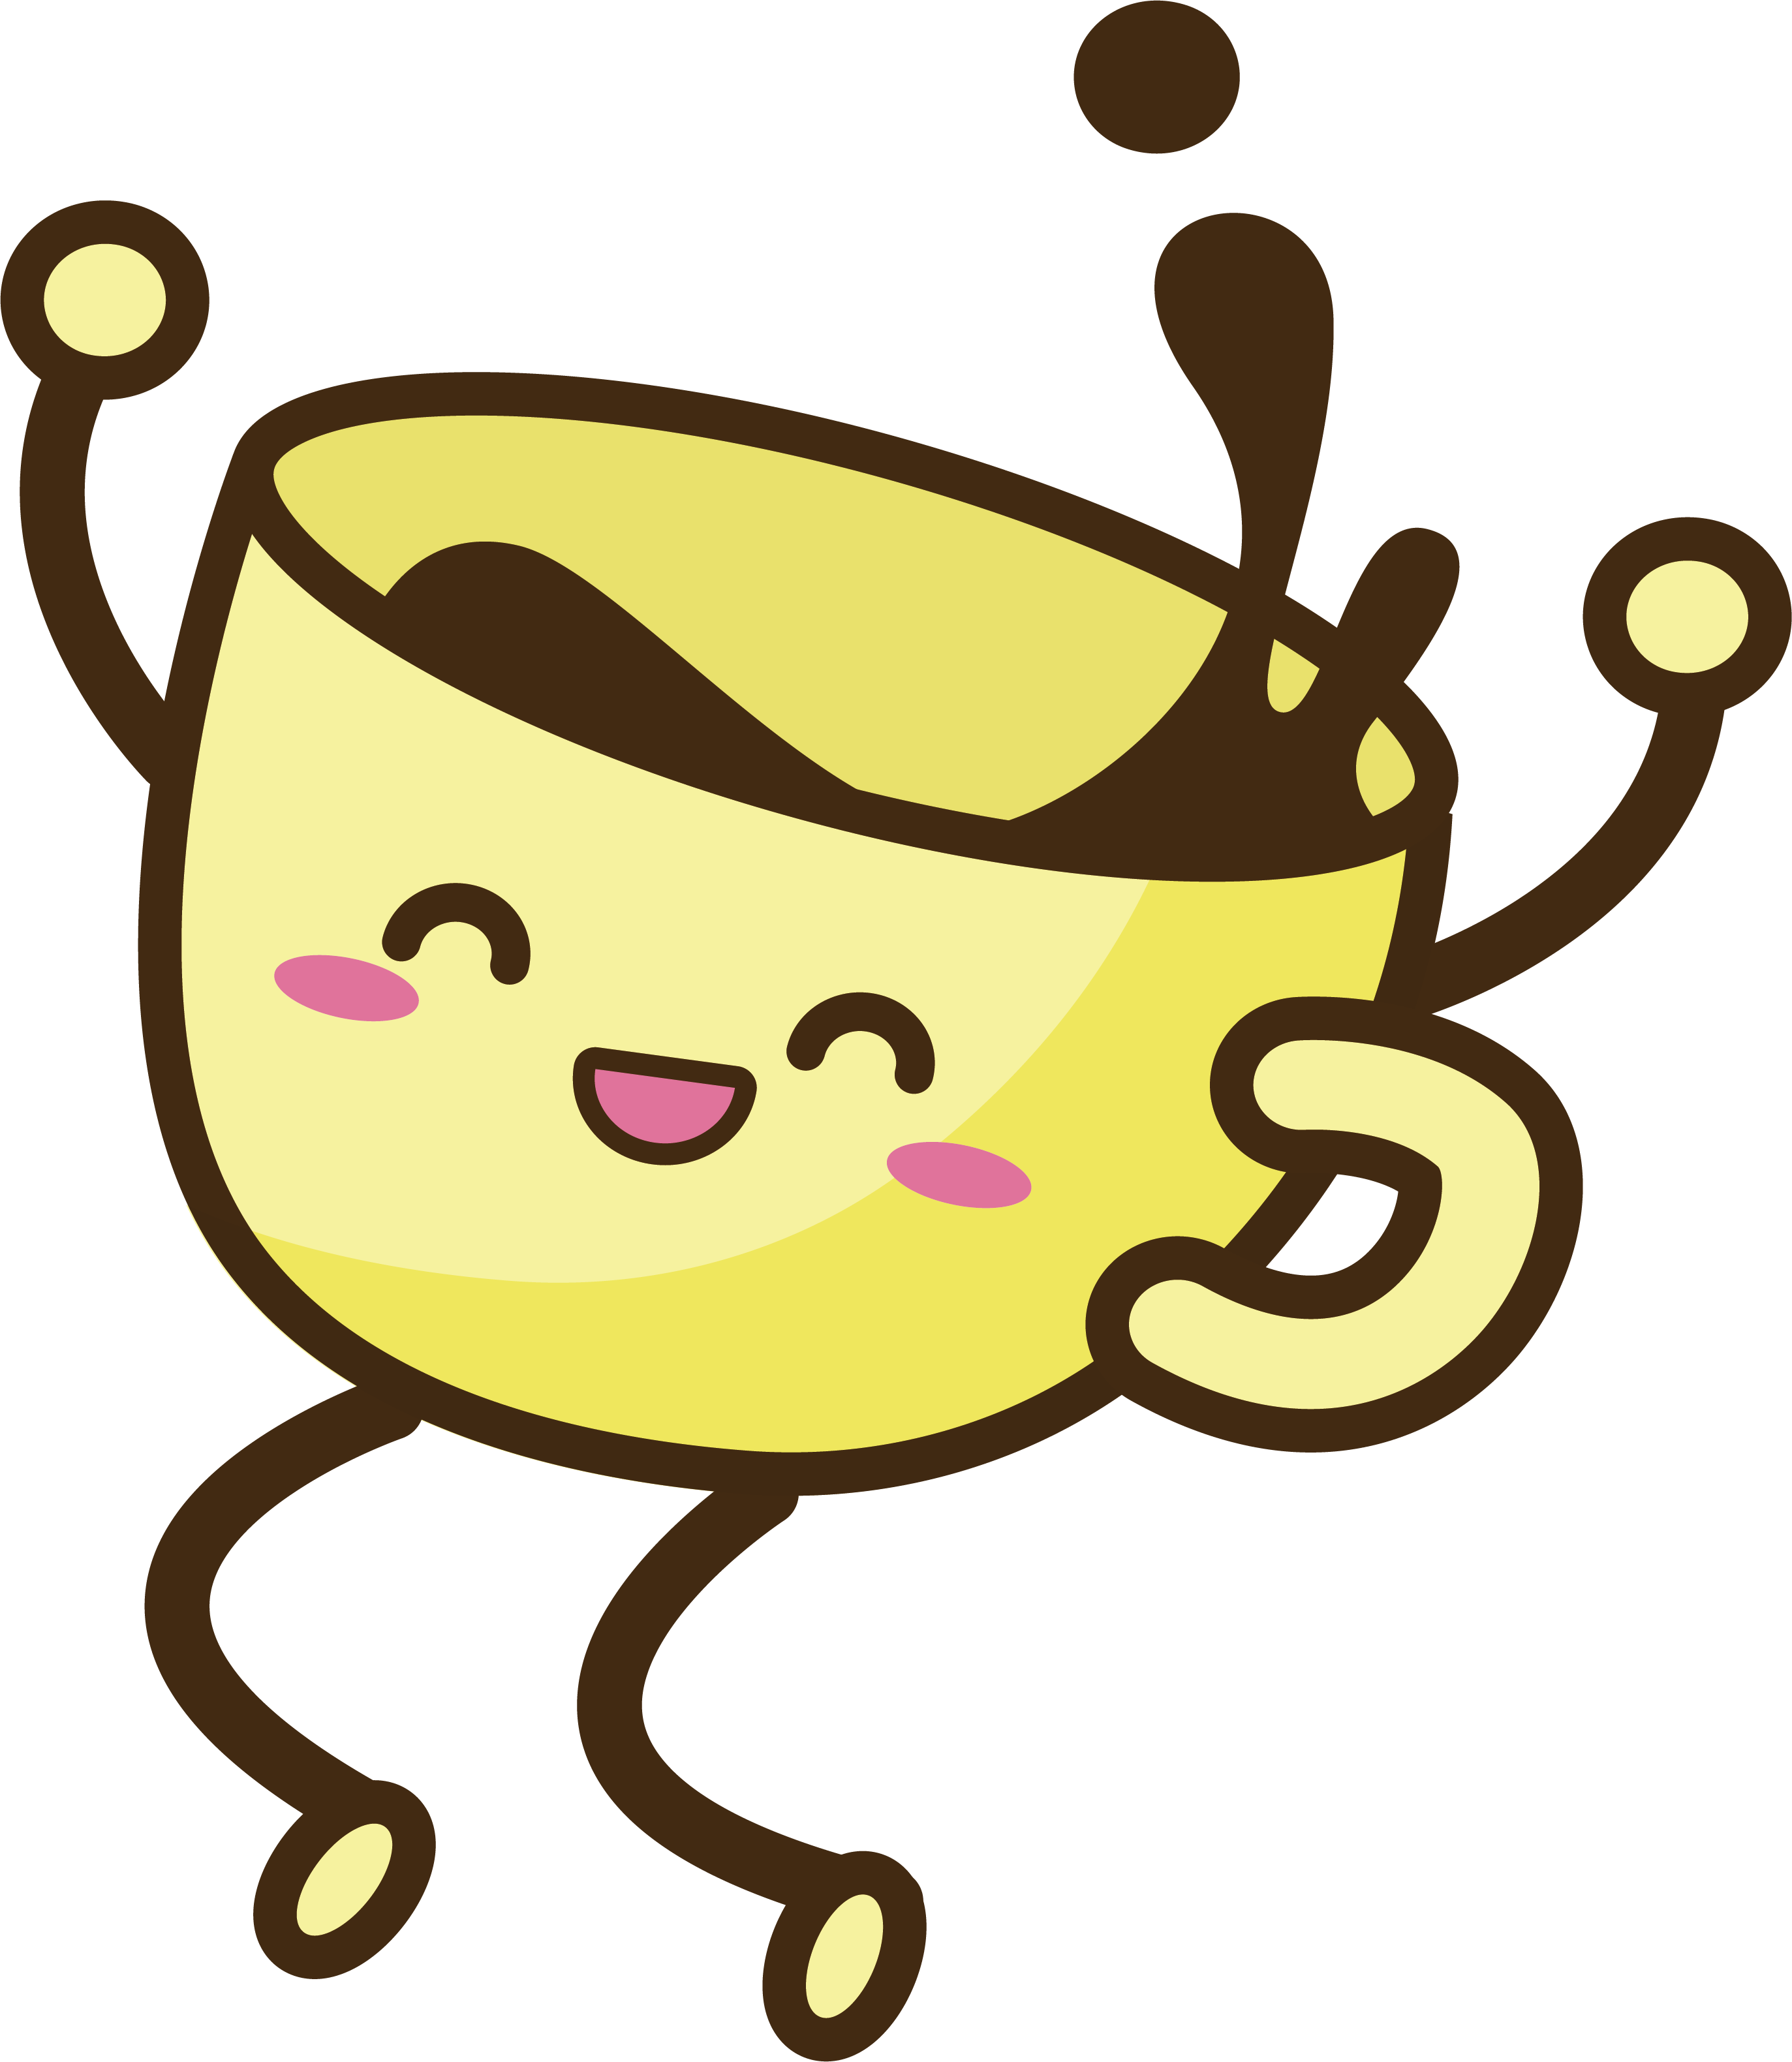 Irish Cappuccino Cup Coffee Cheers Cafe Cartoon PNG Image